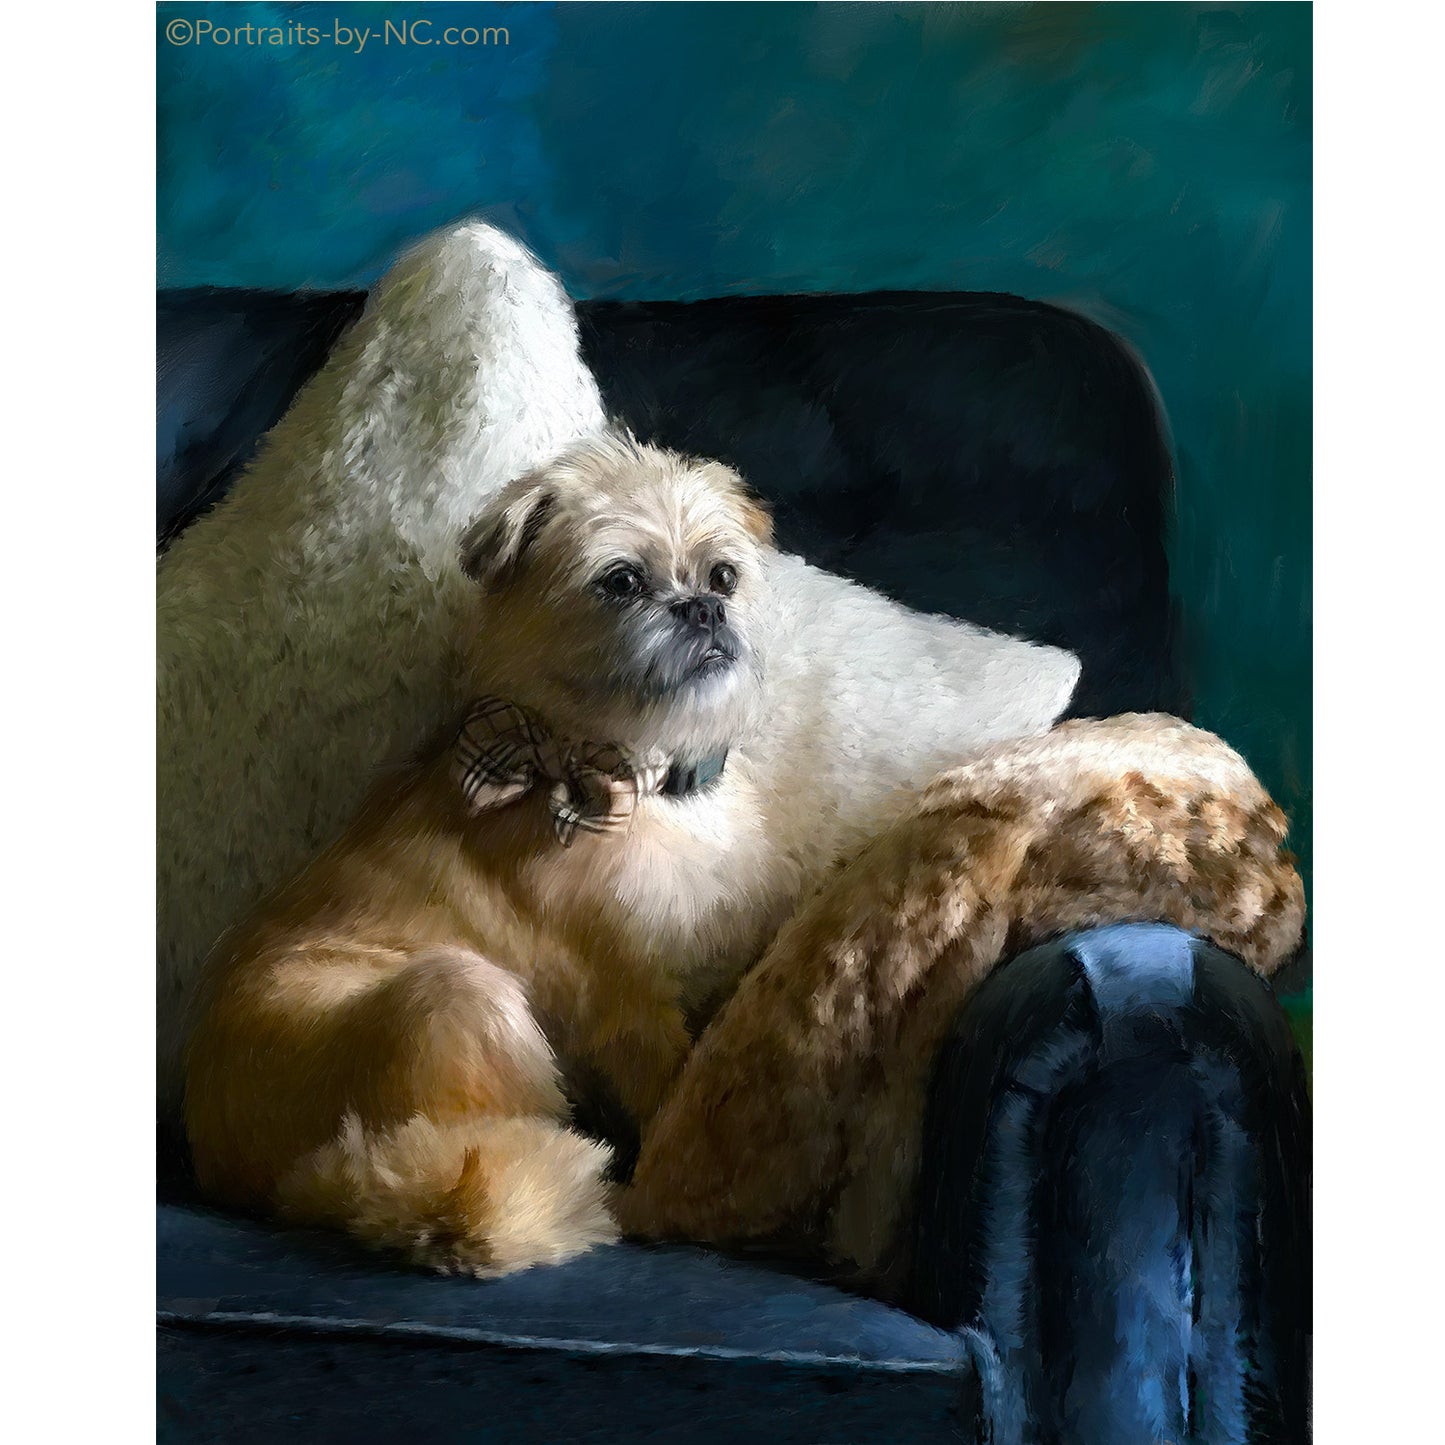 Brussels Griffon Dog Portrait 683 - Portraits by NC